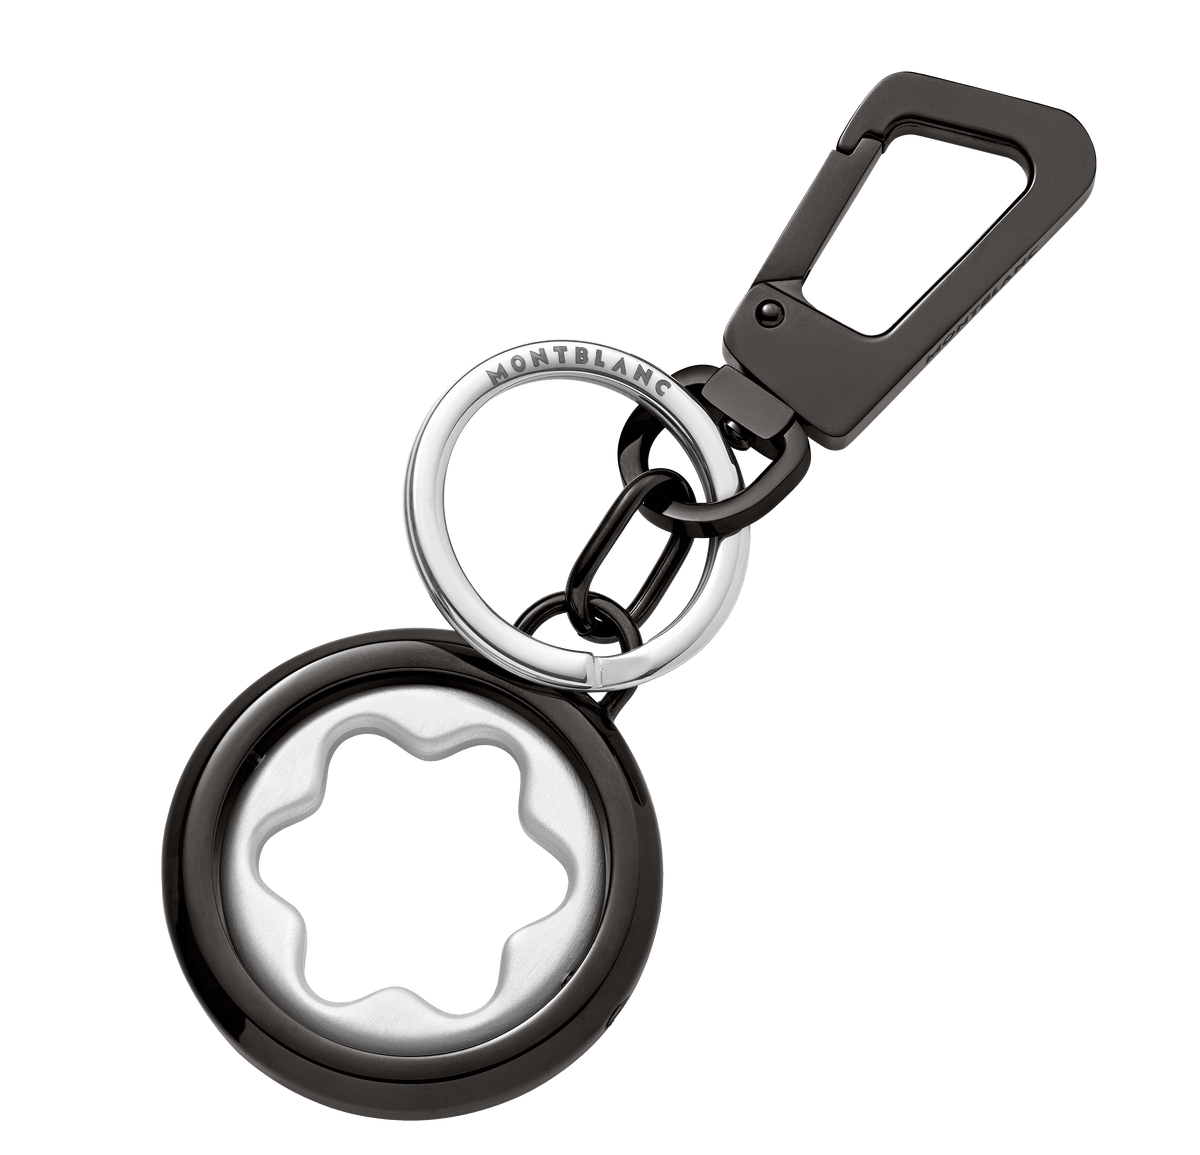 Meisterstück Spinning Emblem Key Fob